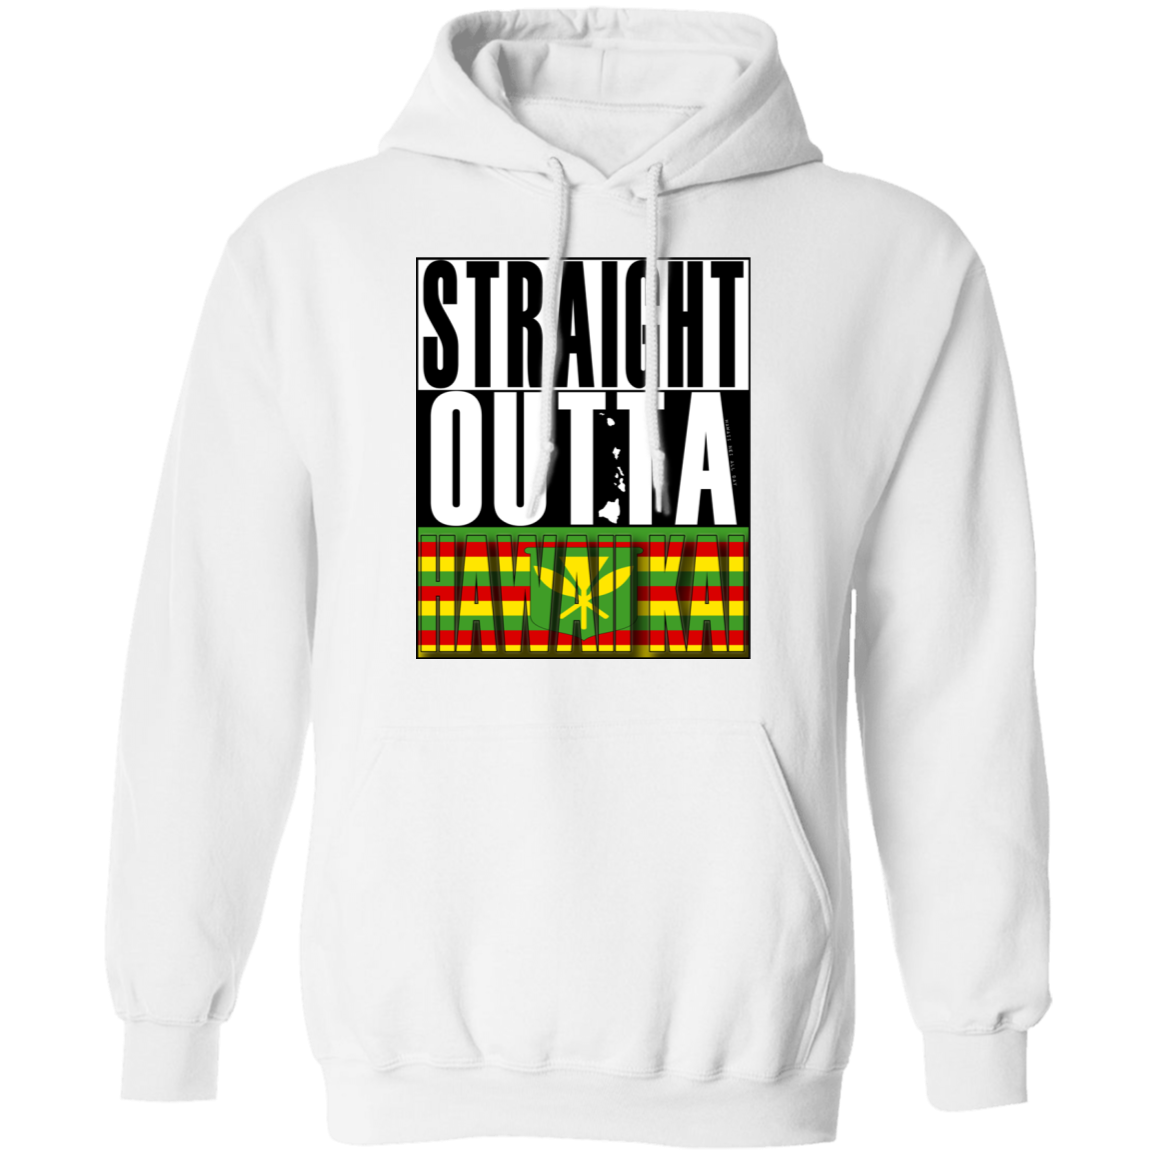 Straight Outta Hawaii Kai(Kanaka Maoli) Pullover Hoodie, Sweatshirts, Hawaii Nei All Day